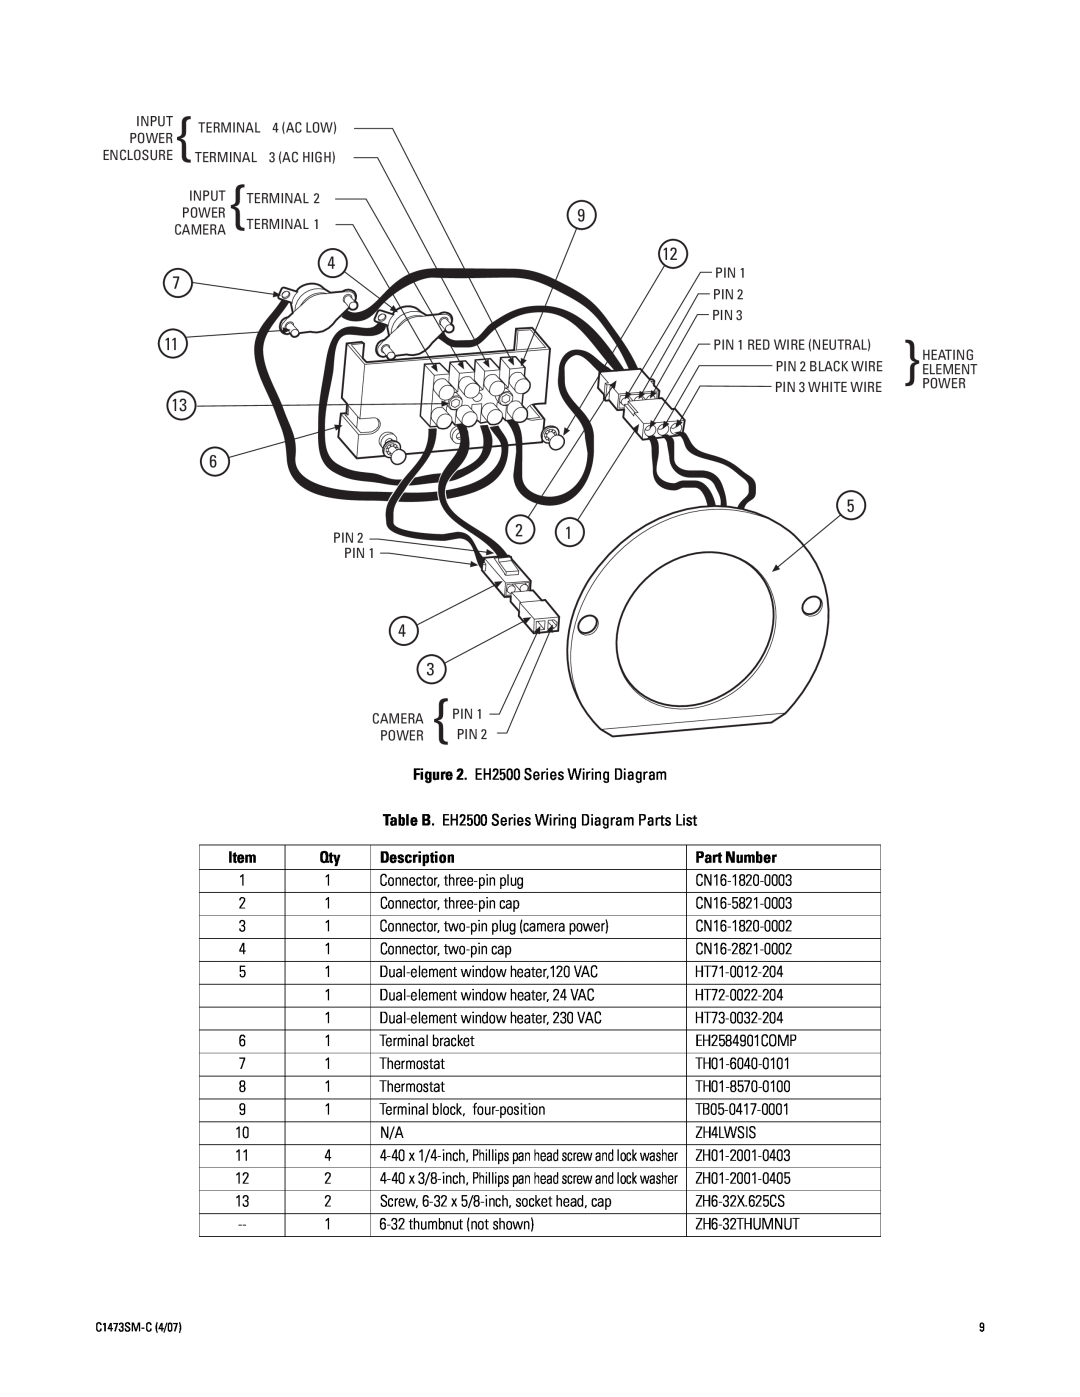 Pelco manual Table B. EH2500 Series Wiring Diagram Parts List 